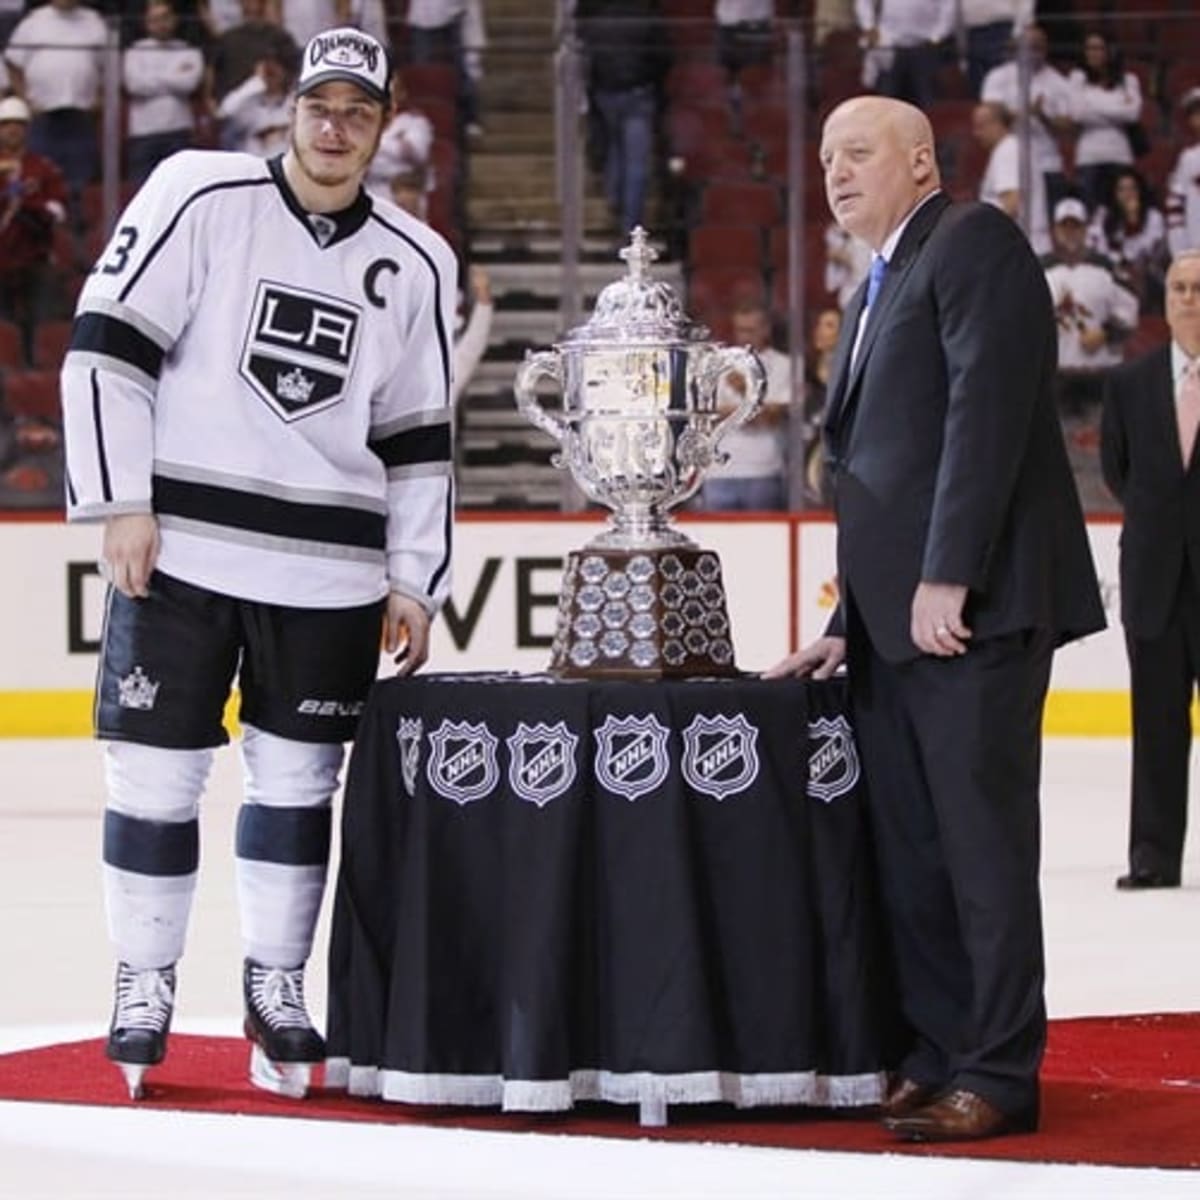 Dustin Brown and LA Kings receive 2012 Stanley Cup 